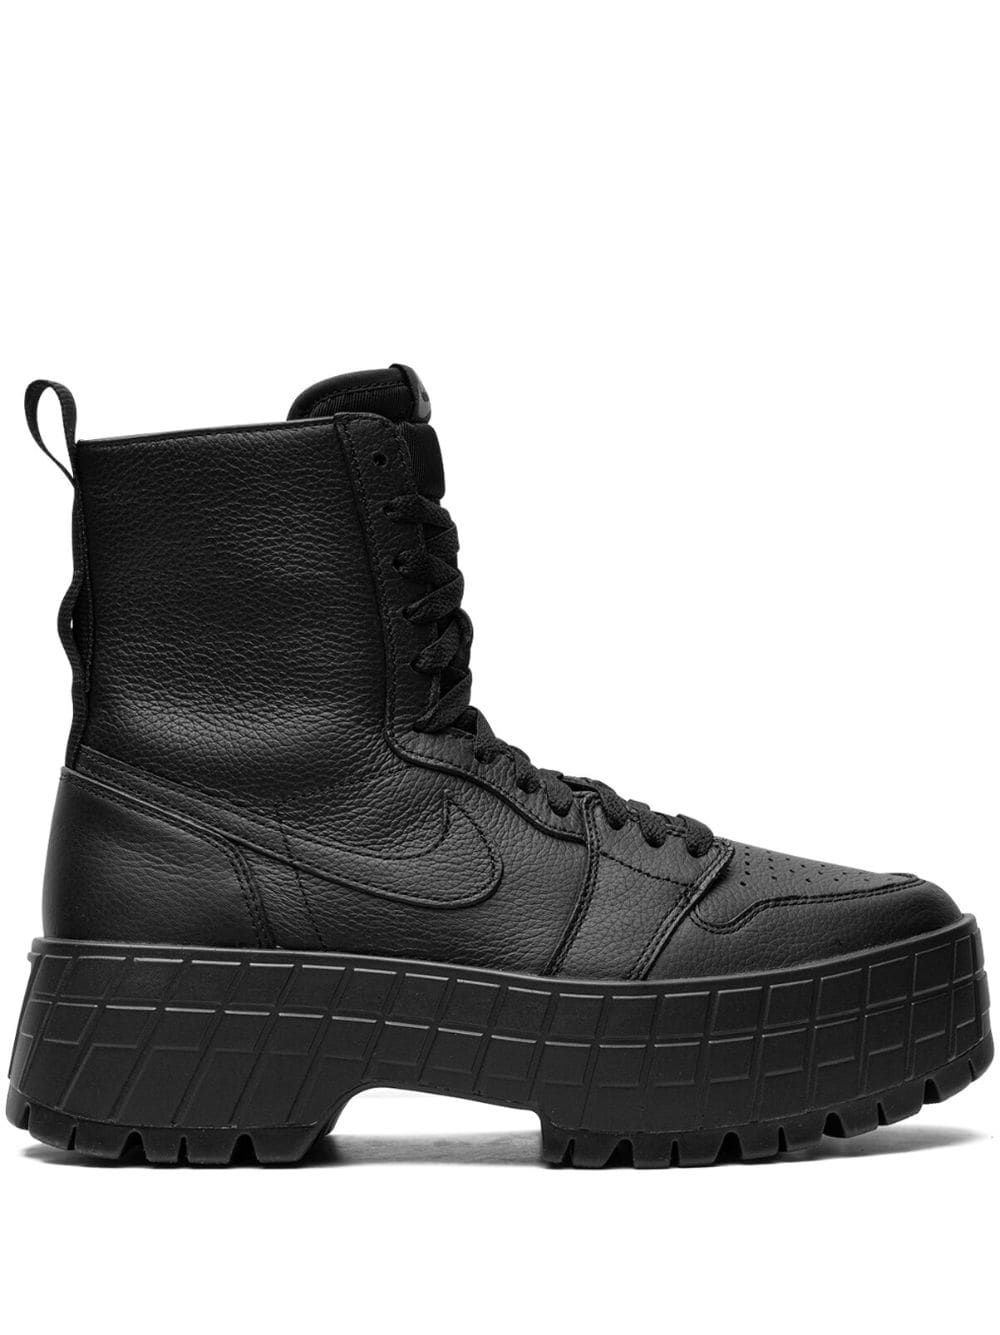 Jordan Air Jordan 1 Brooklyn boots - Black von Jordan